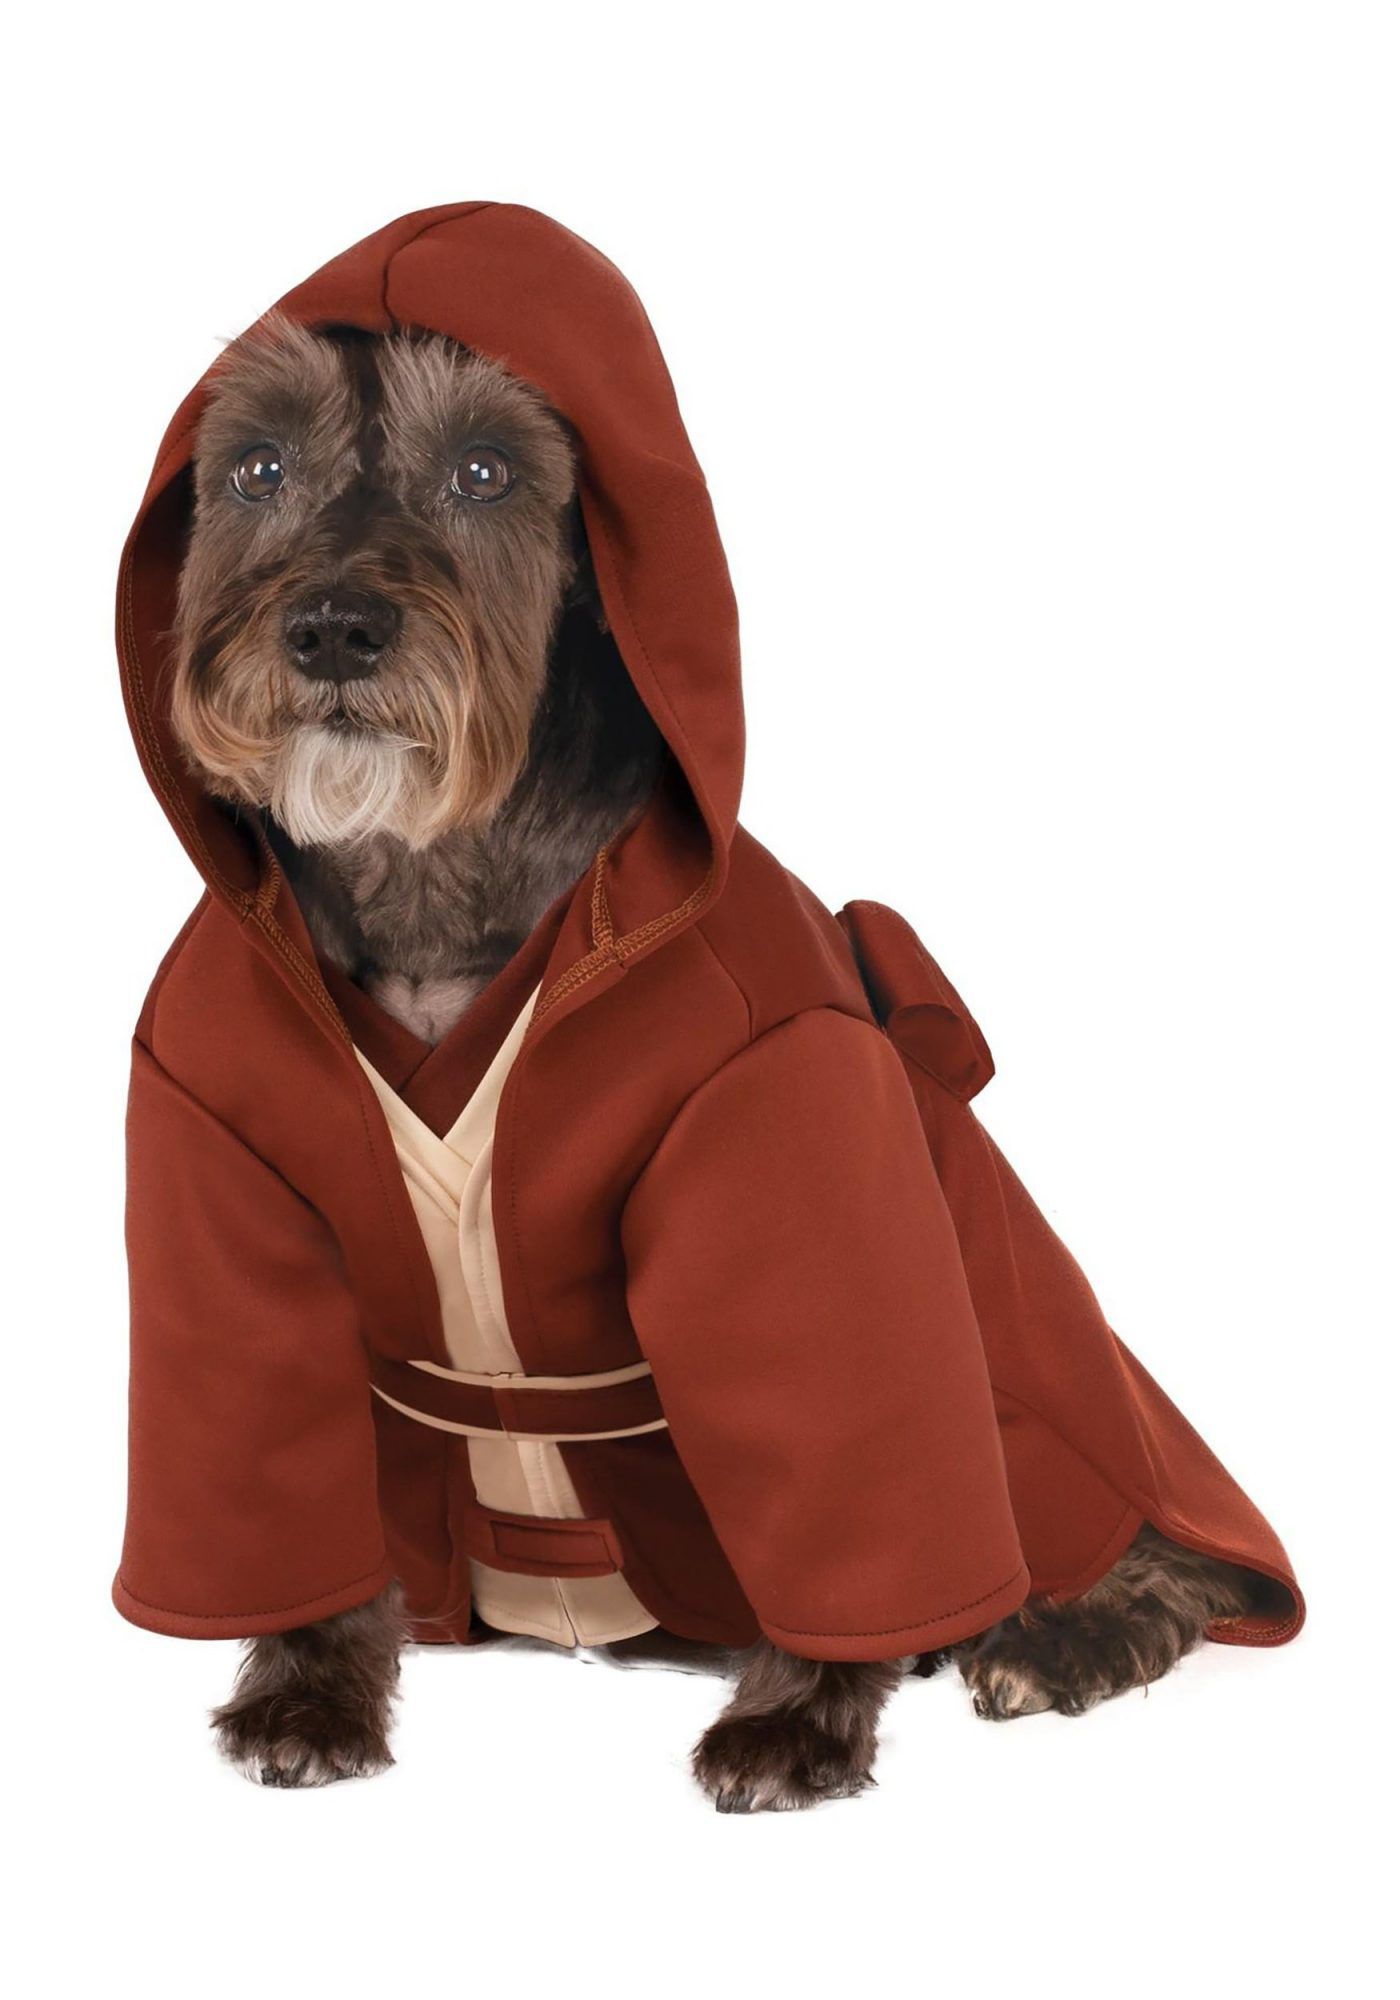 Jedi Star Wars dog costume for Halloween